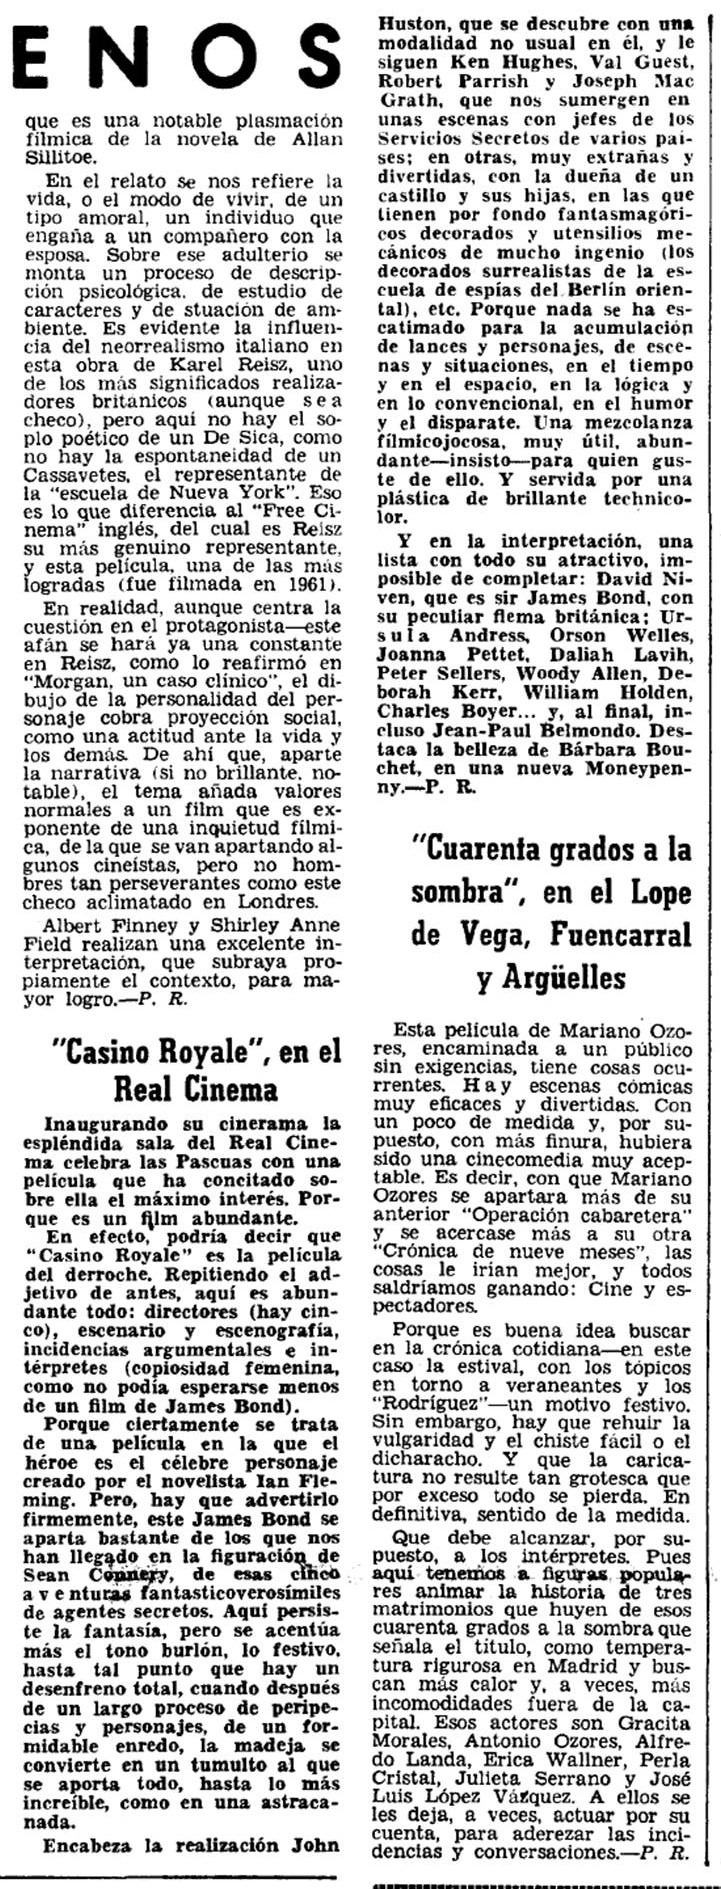 67 CR 1967 12 23 Diario Madrid Critica